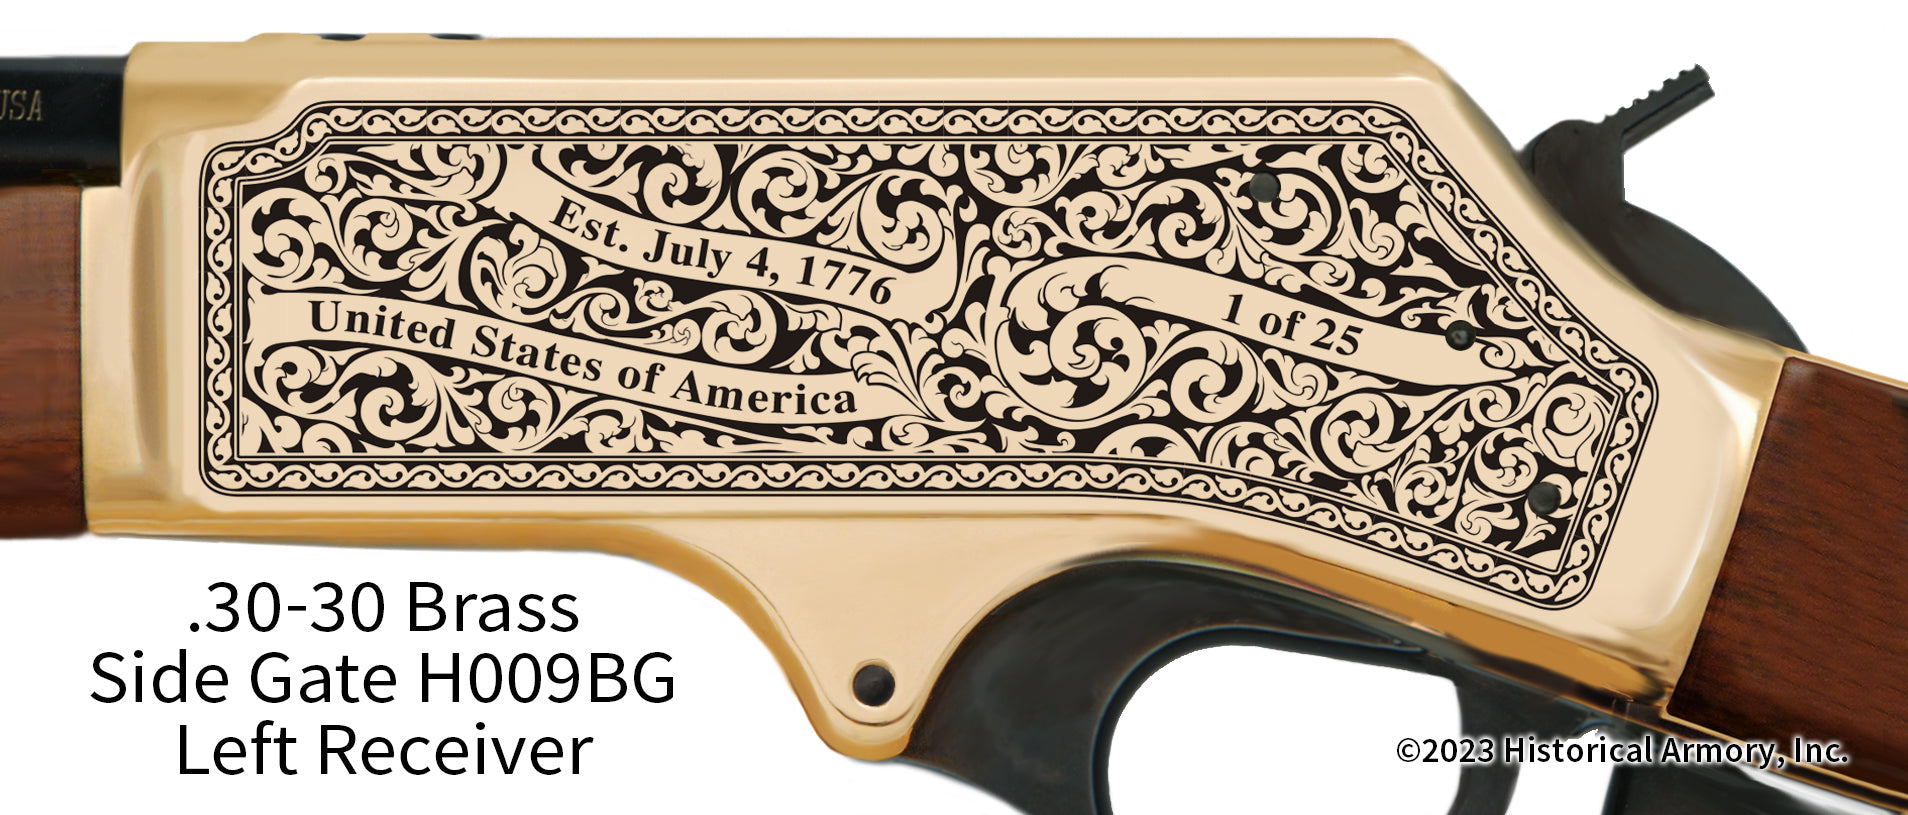 Dunklin County Missouri Engraved Henry .30-30 Brass Side Gate Rifle